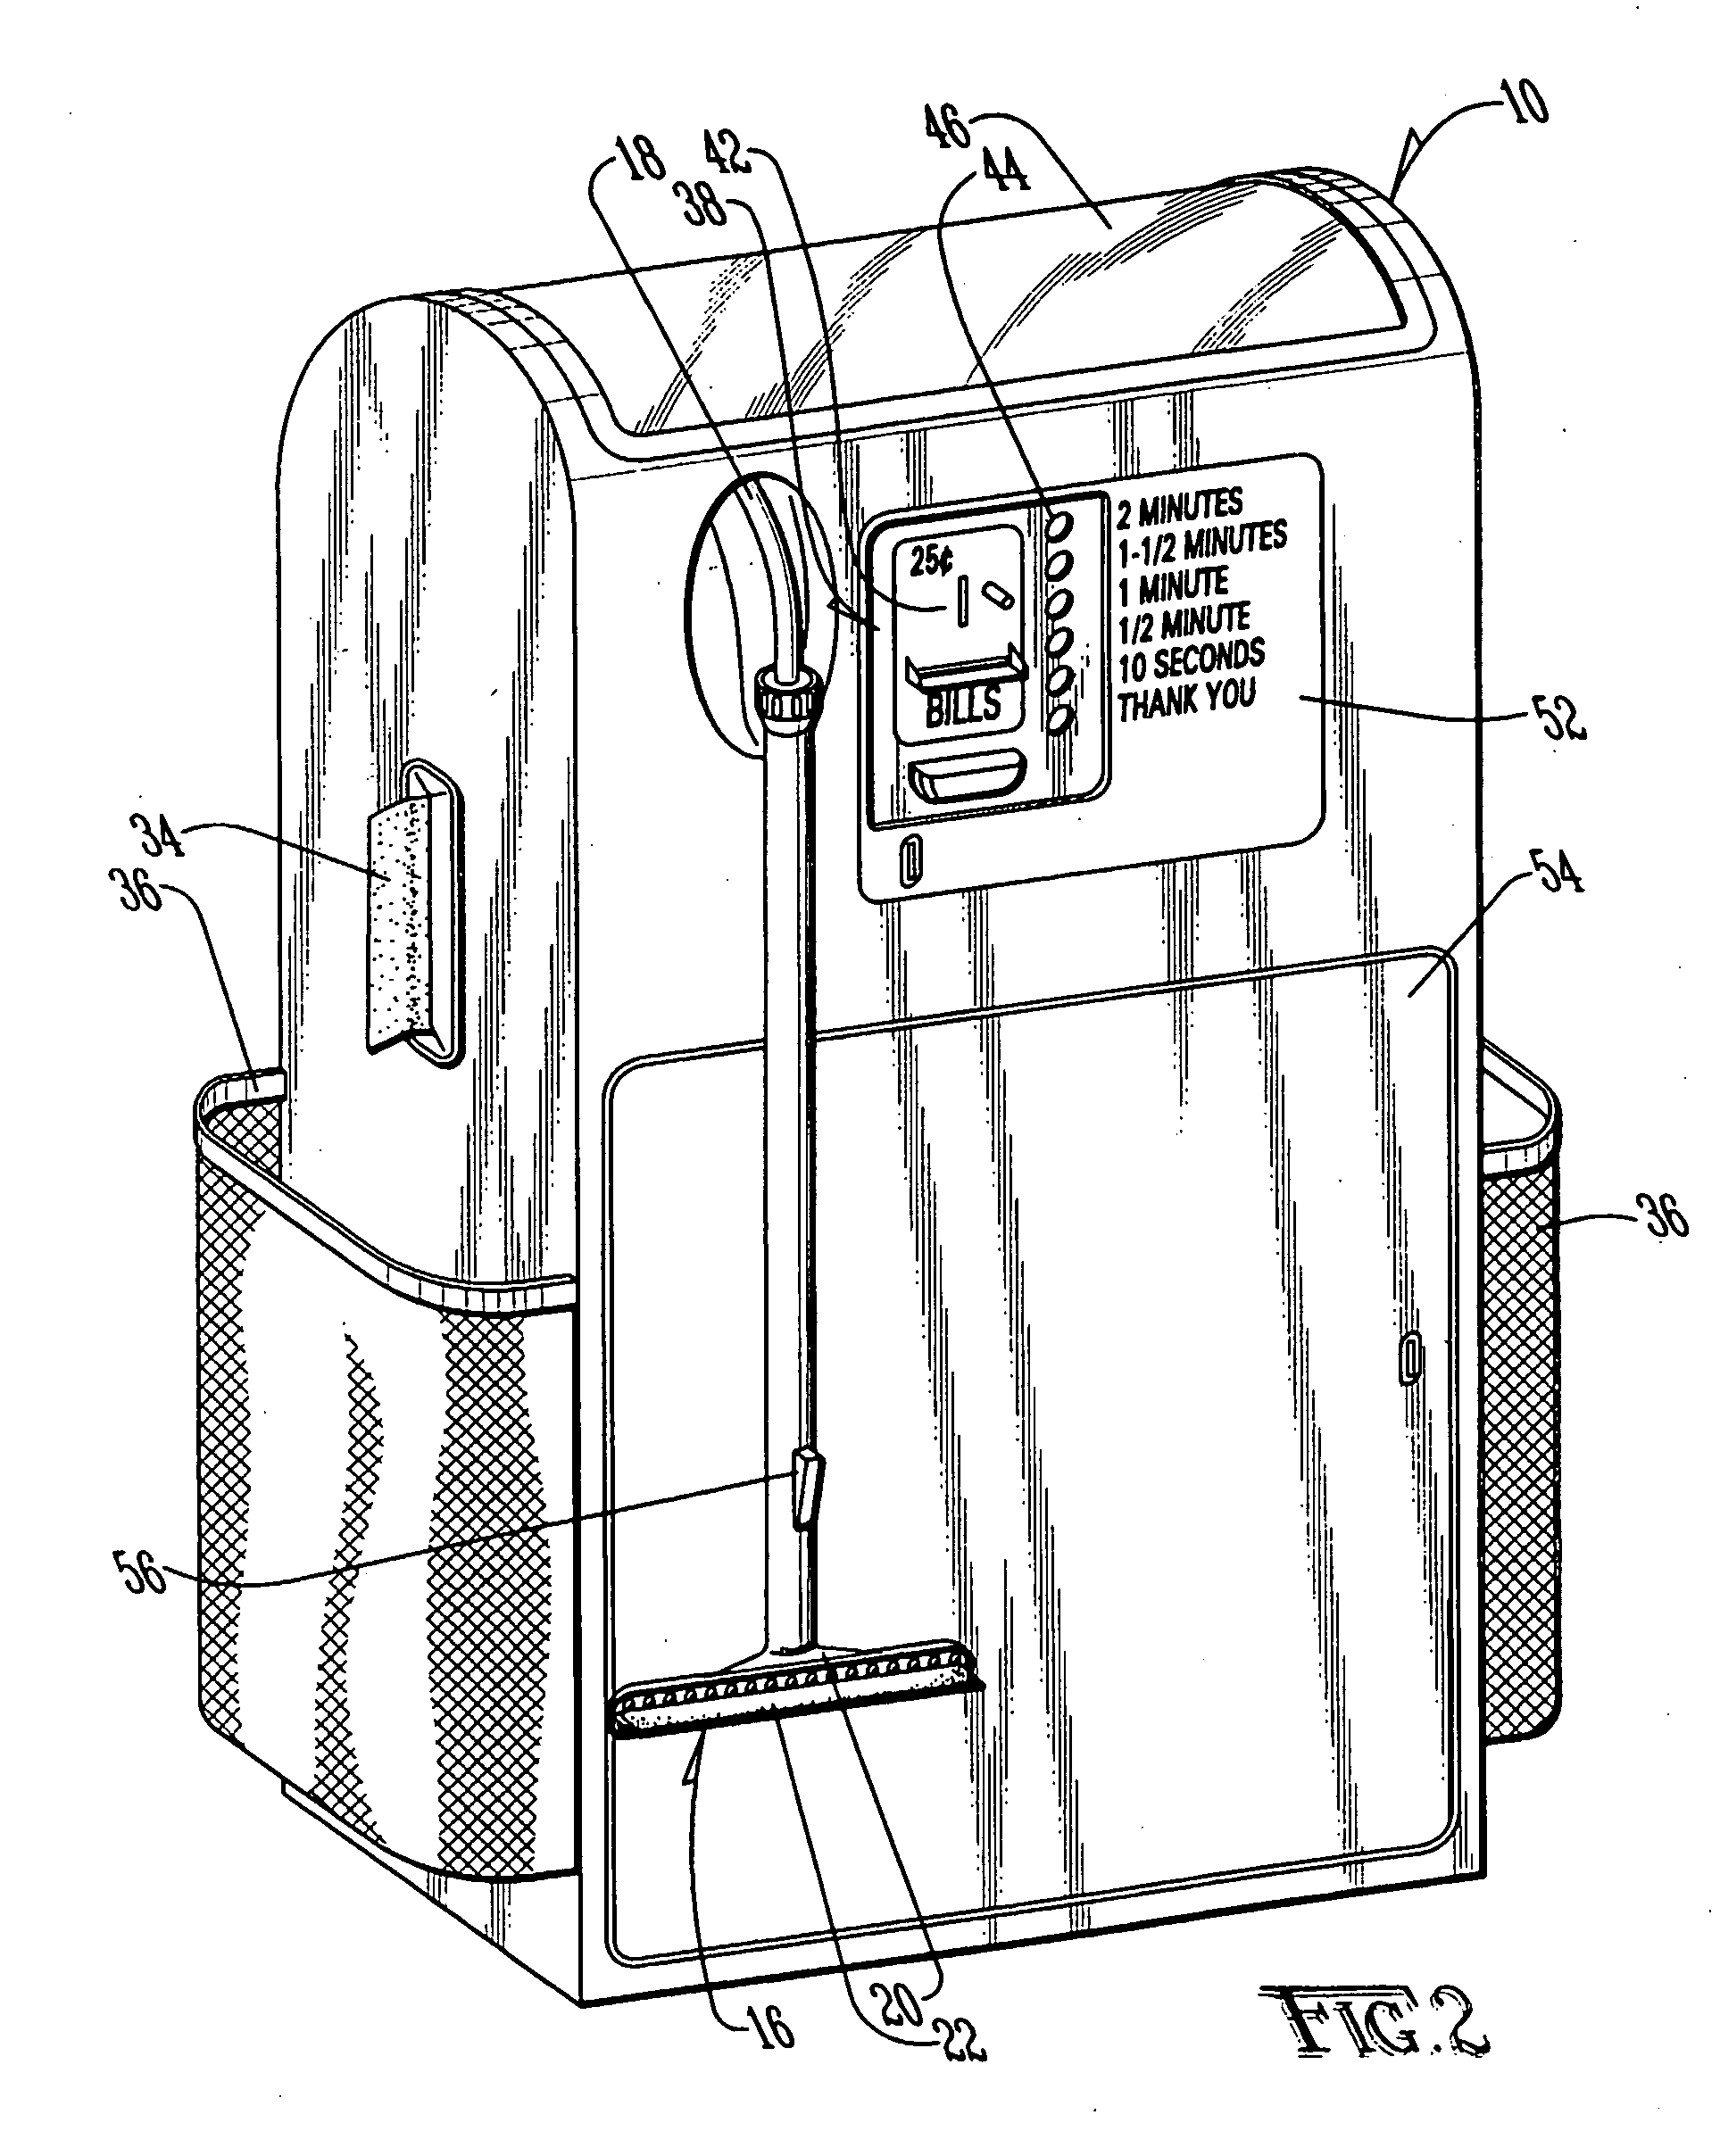 Automobile window washer apparatus